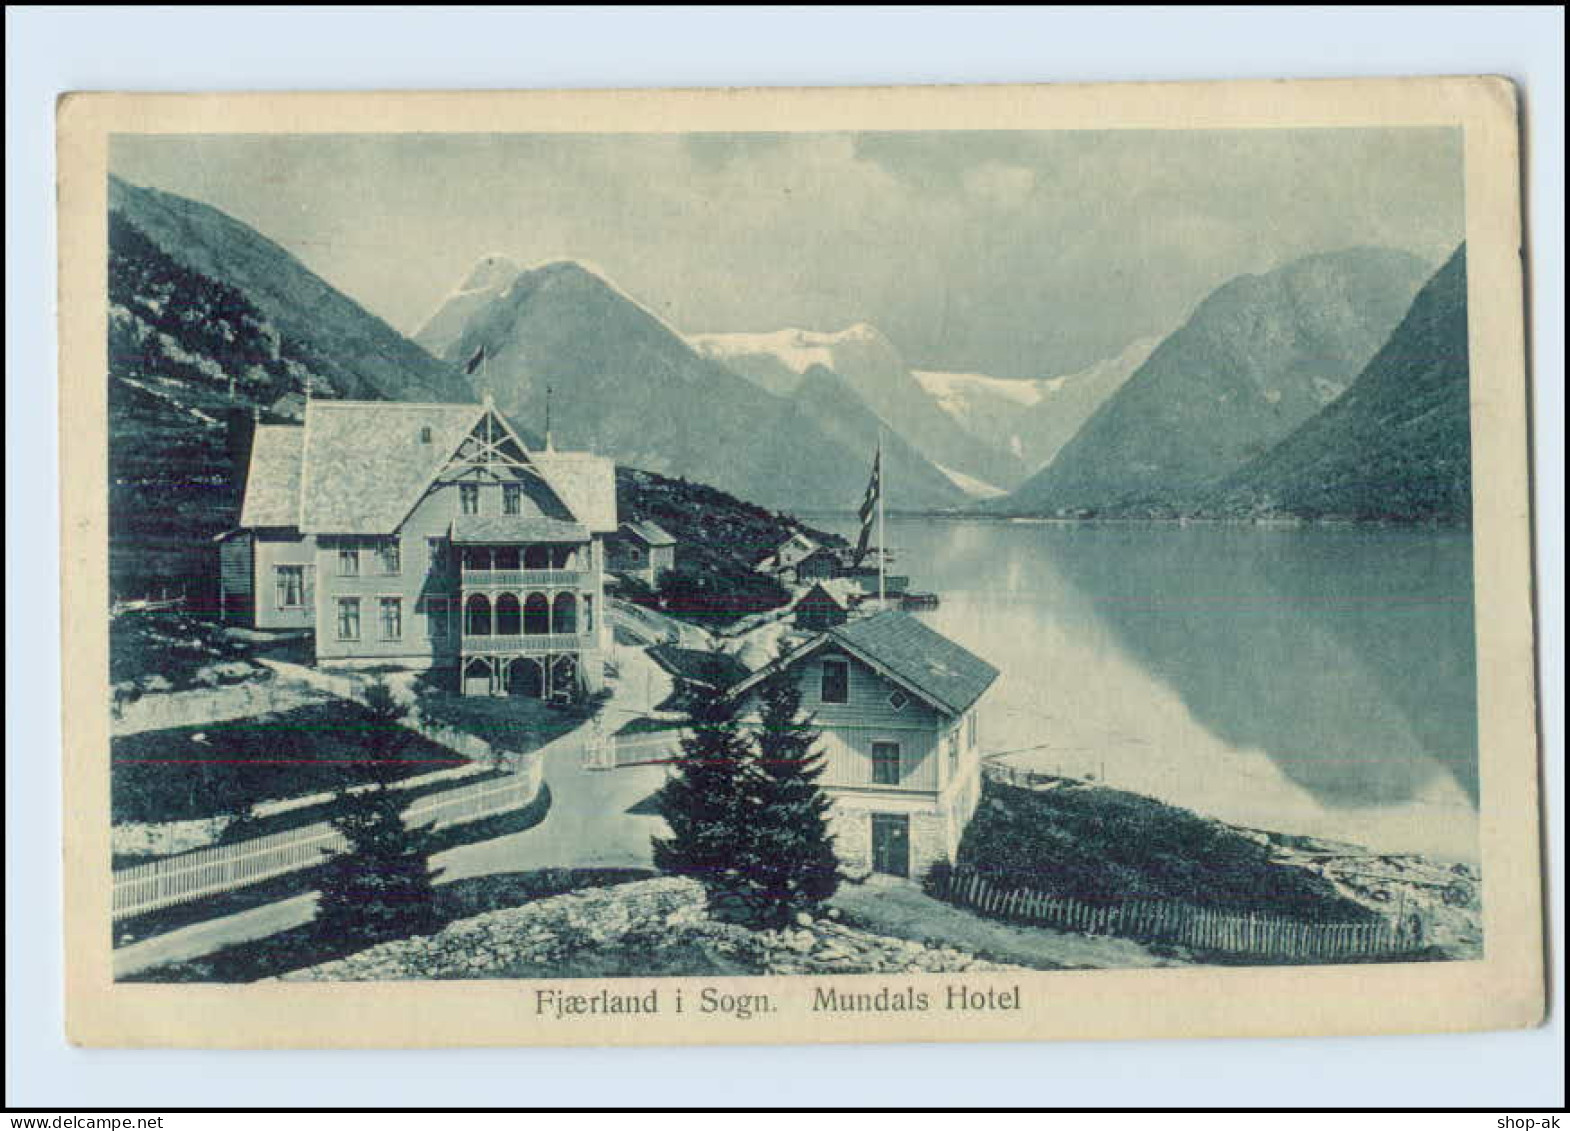 N011/ Fjaerland I Sogn In Norwegen, Mundals Hotel AK 1911 - Norwegen